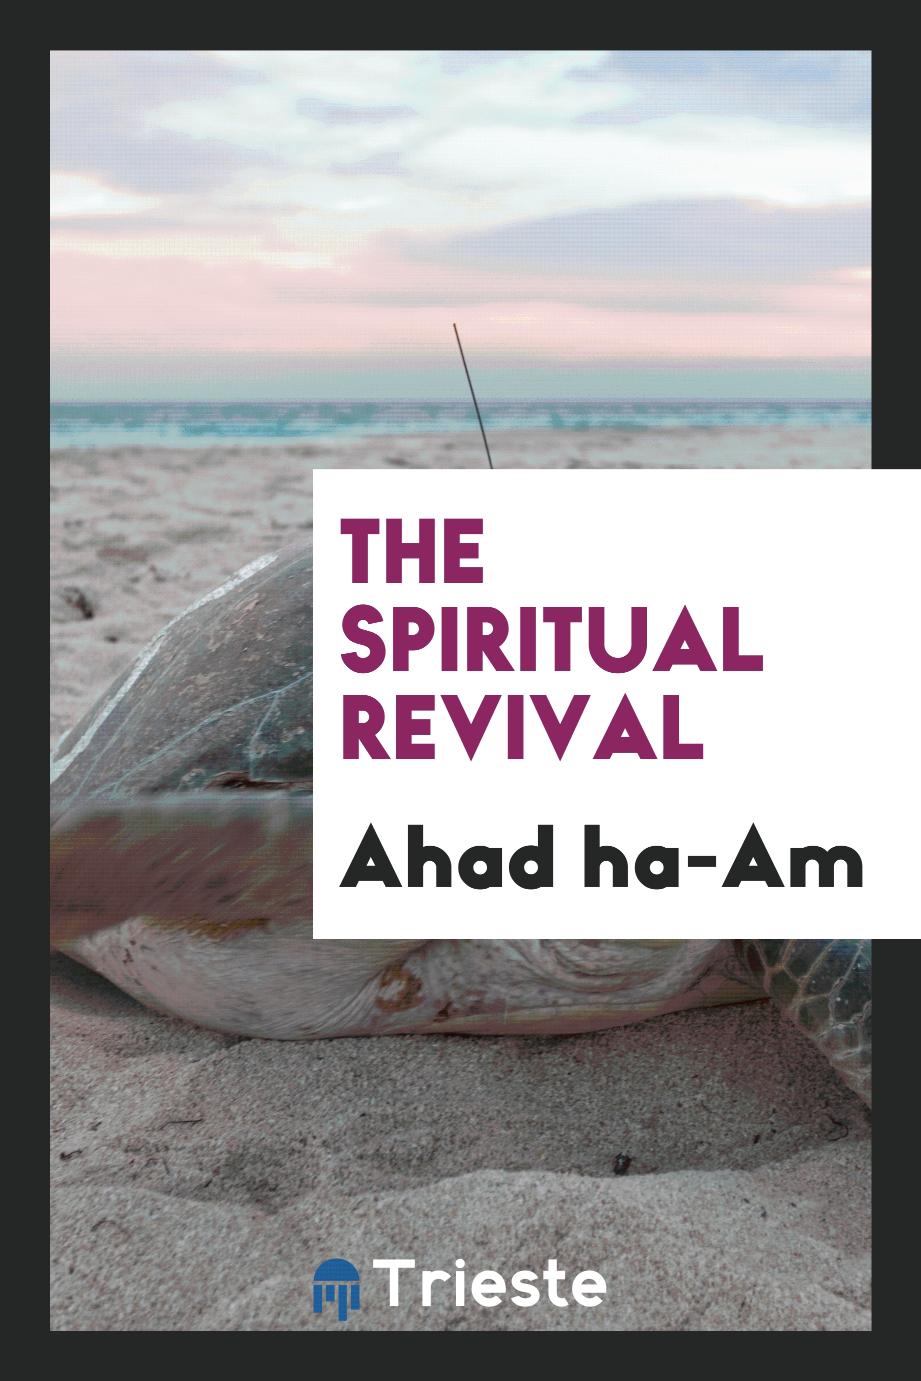 The spiritual revival